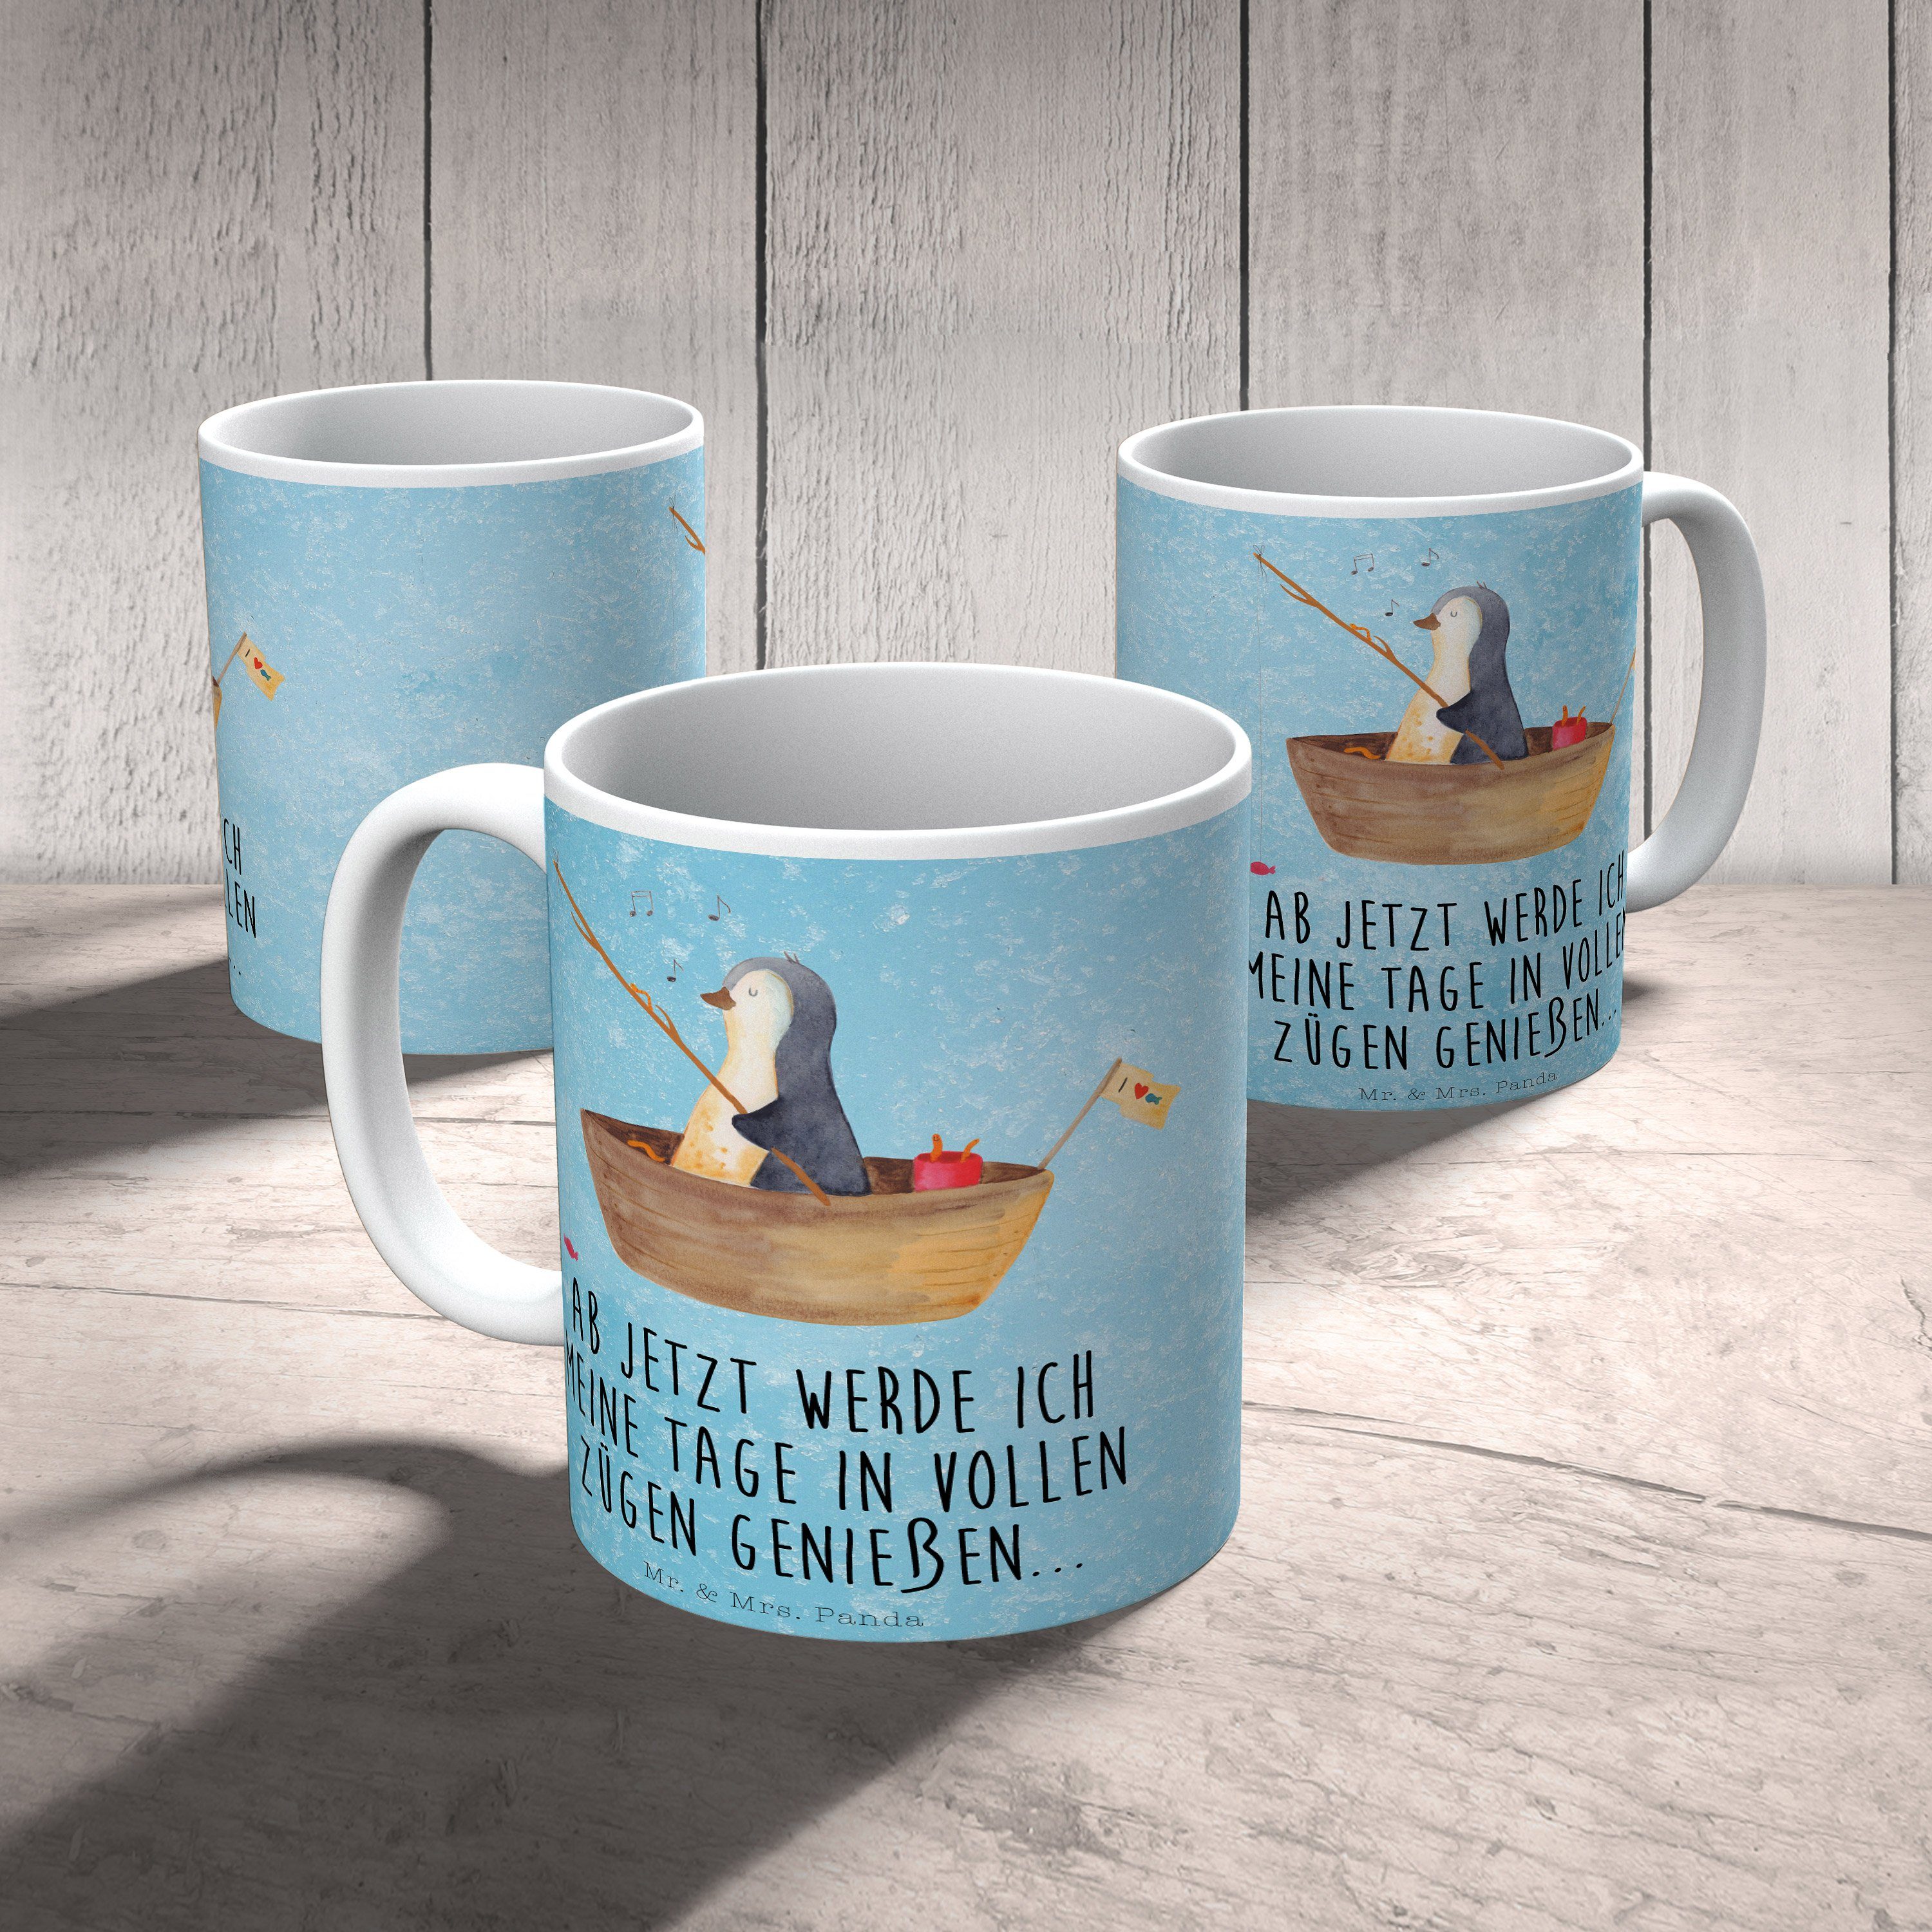 Pinguin Neuan, Trennung, Eisblau Angelboot - Tasse & - Keramik Mrs. Geschenk, Panda Kaffeebecher, Mr.